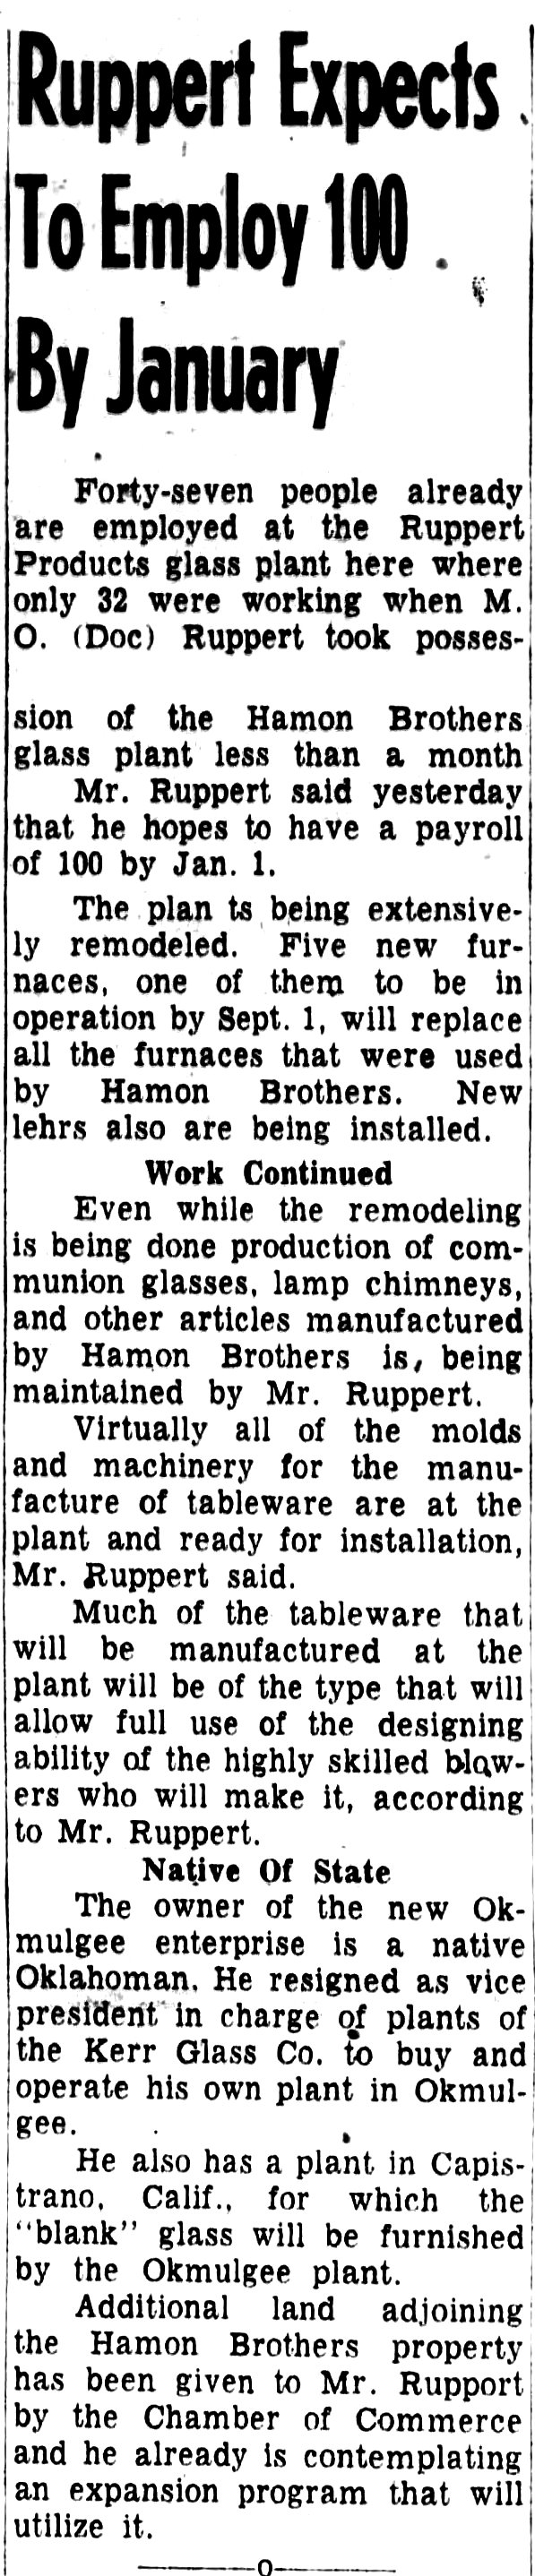 1946/08/16 Newspaper Article